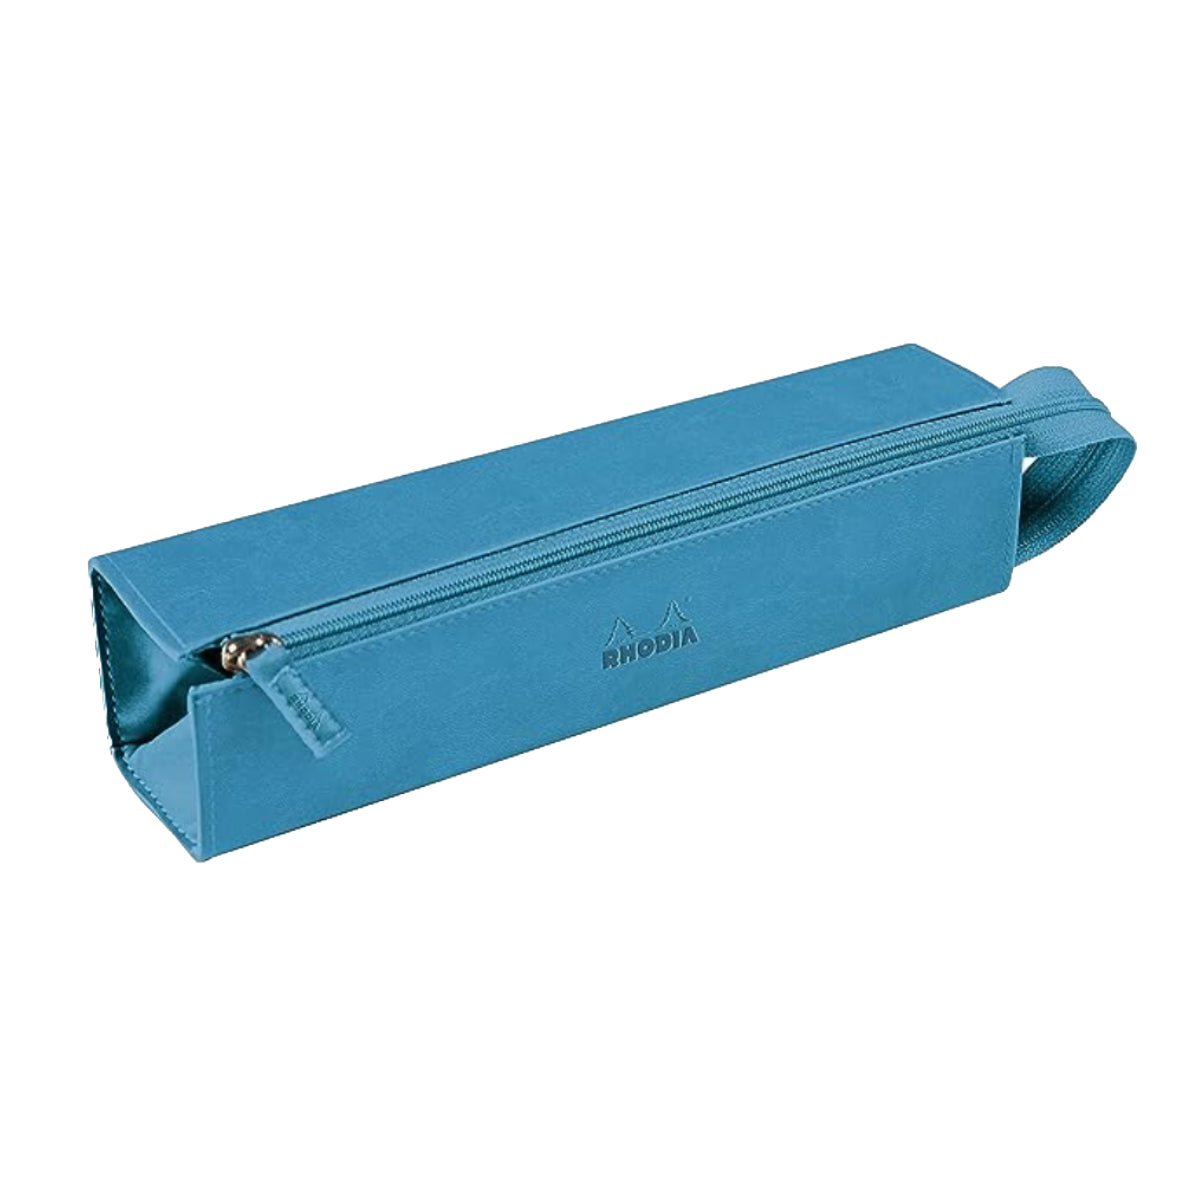 RHODIA rhodiarama Square Pencil Case with Zipper, PU Leather, 230 x 50 mm, Turquoise